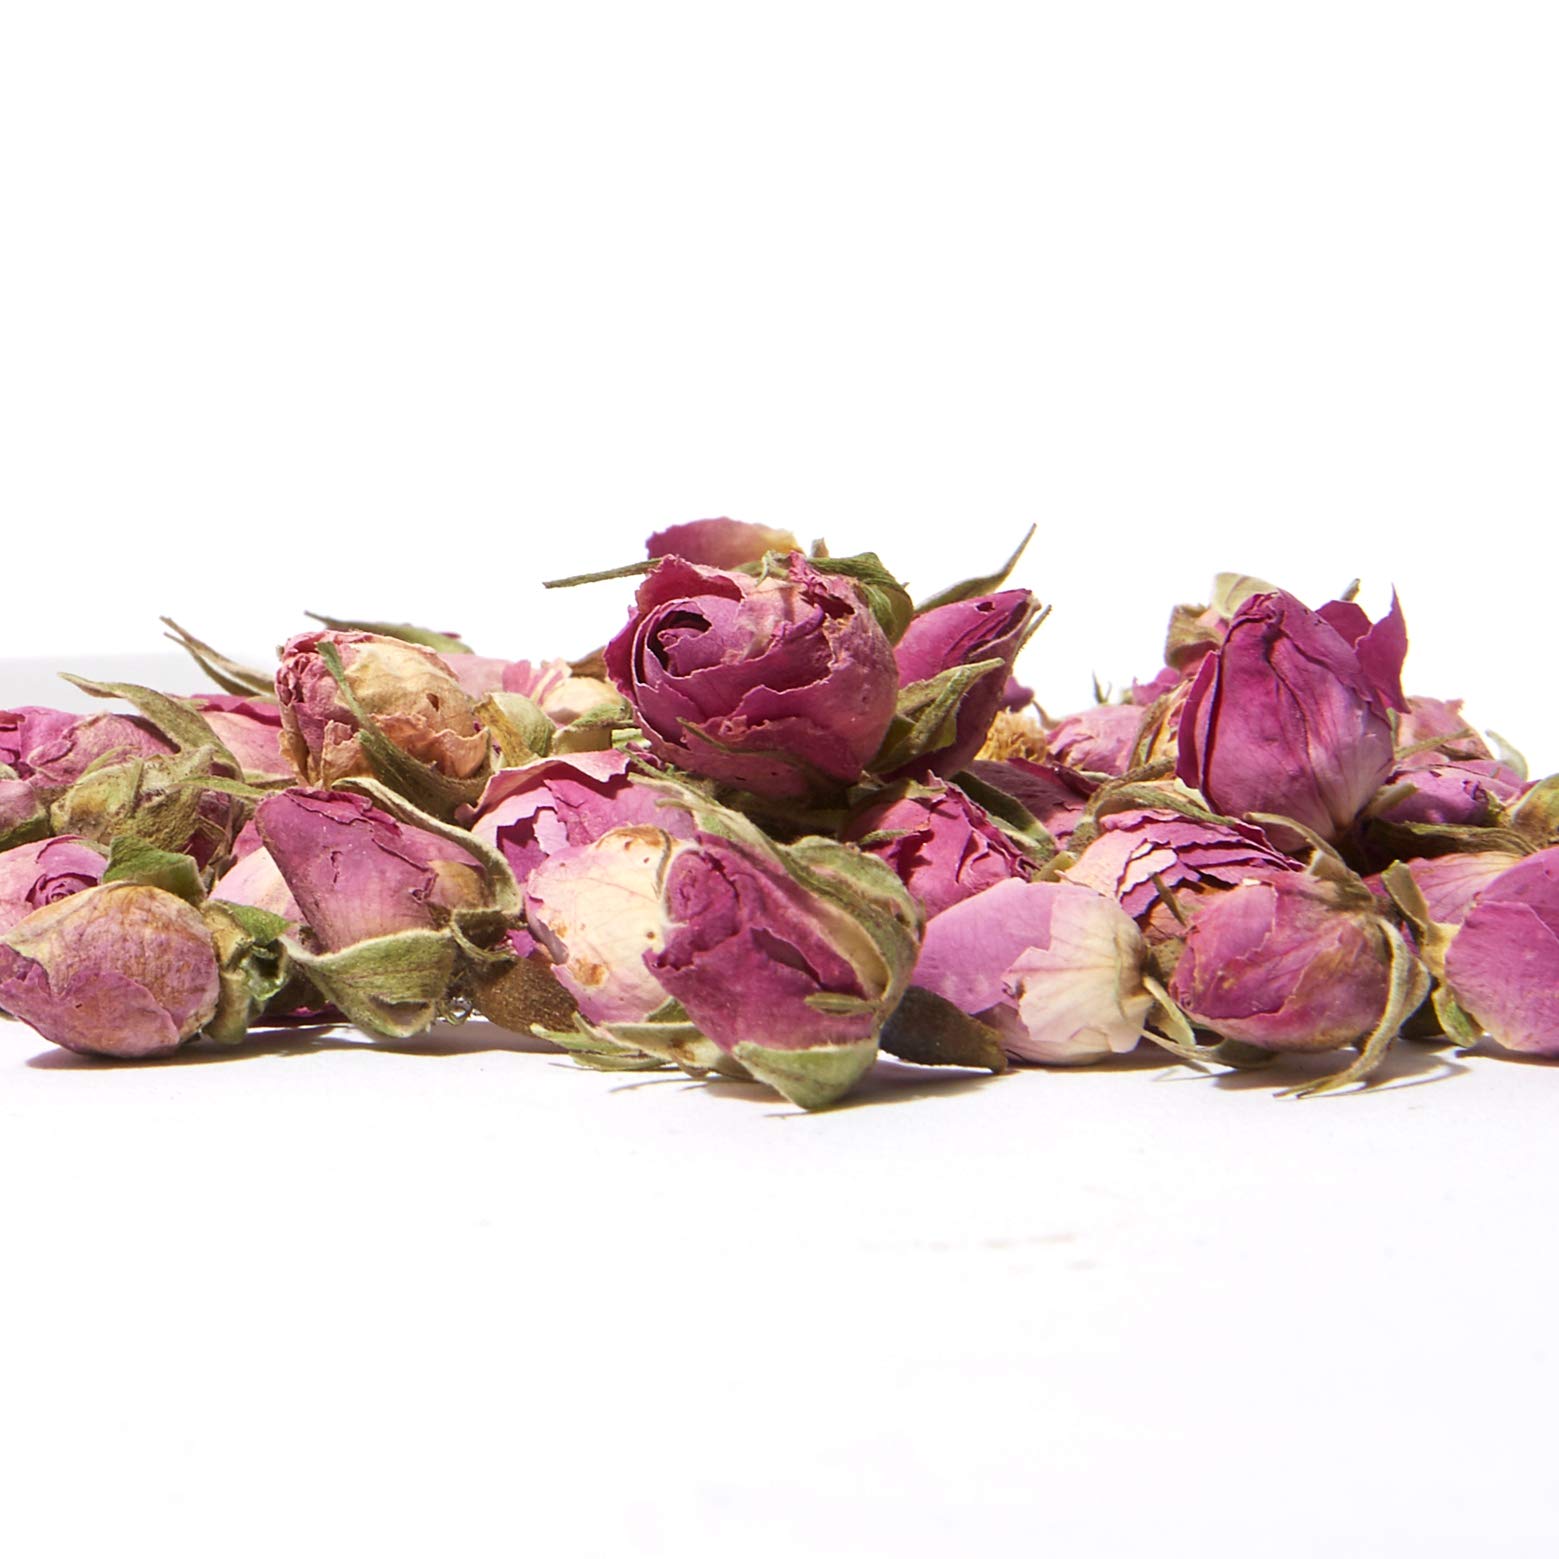 Cha Wu-[A] Pink Rose Buds(3oz),Loose Leaf Flower Petal Tea,Natural Fragrant Herbal Tea,Afternoon Tea